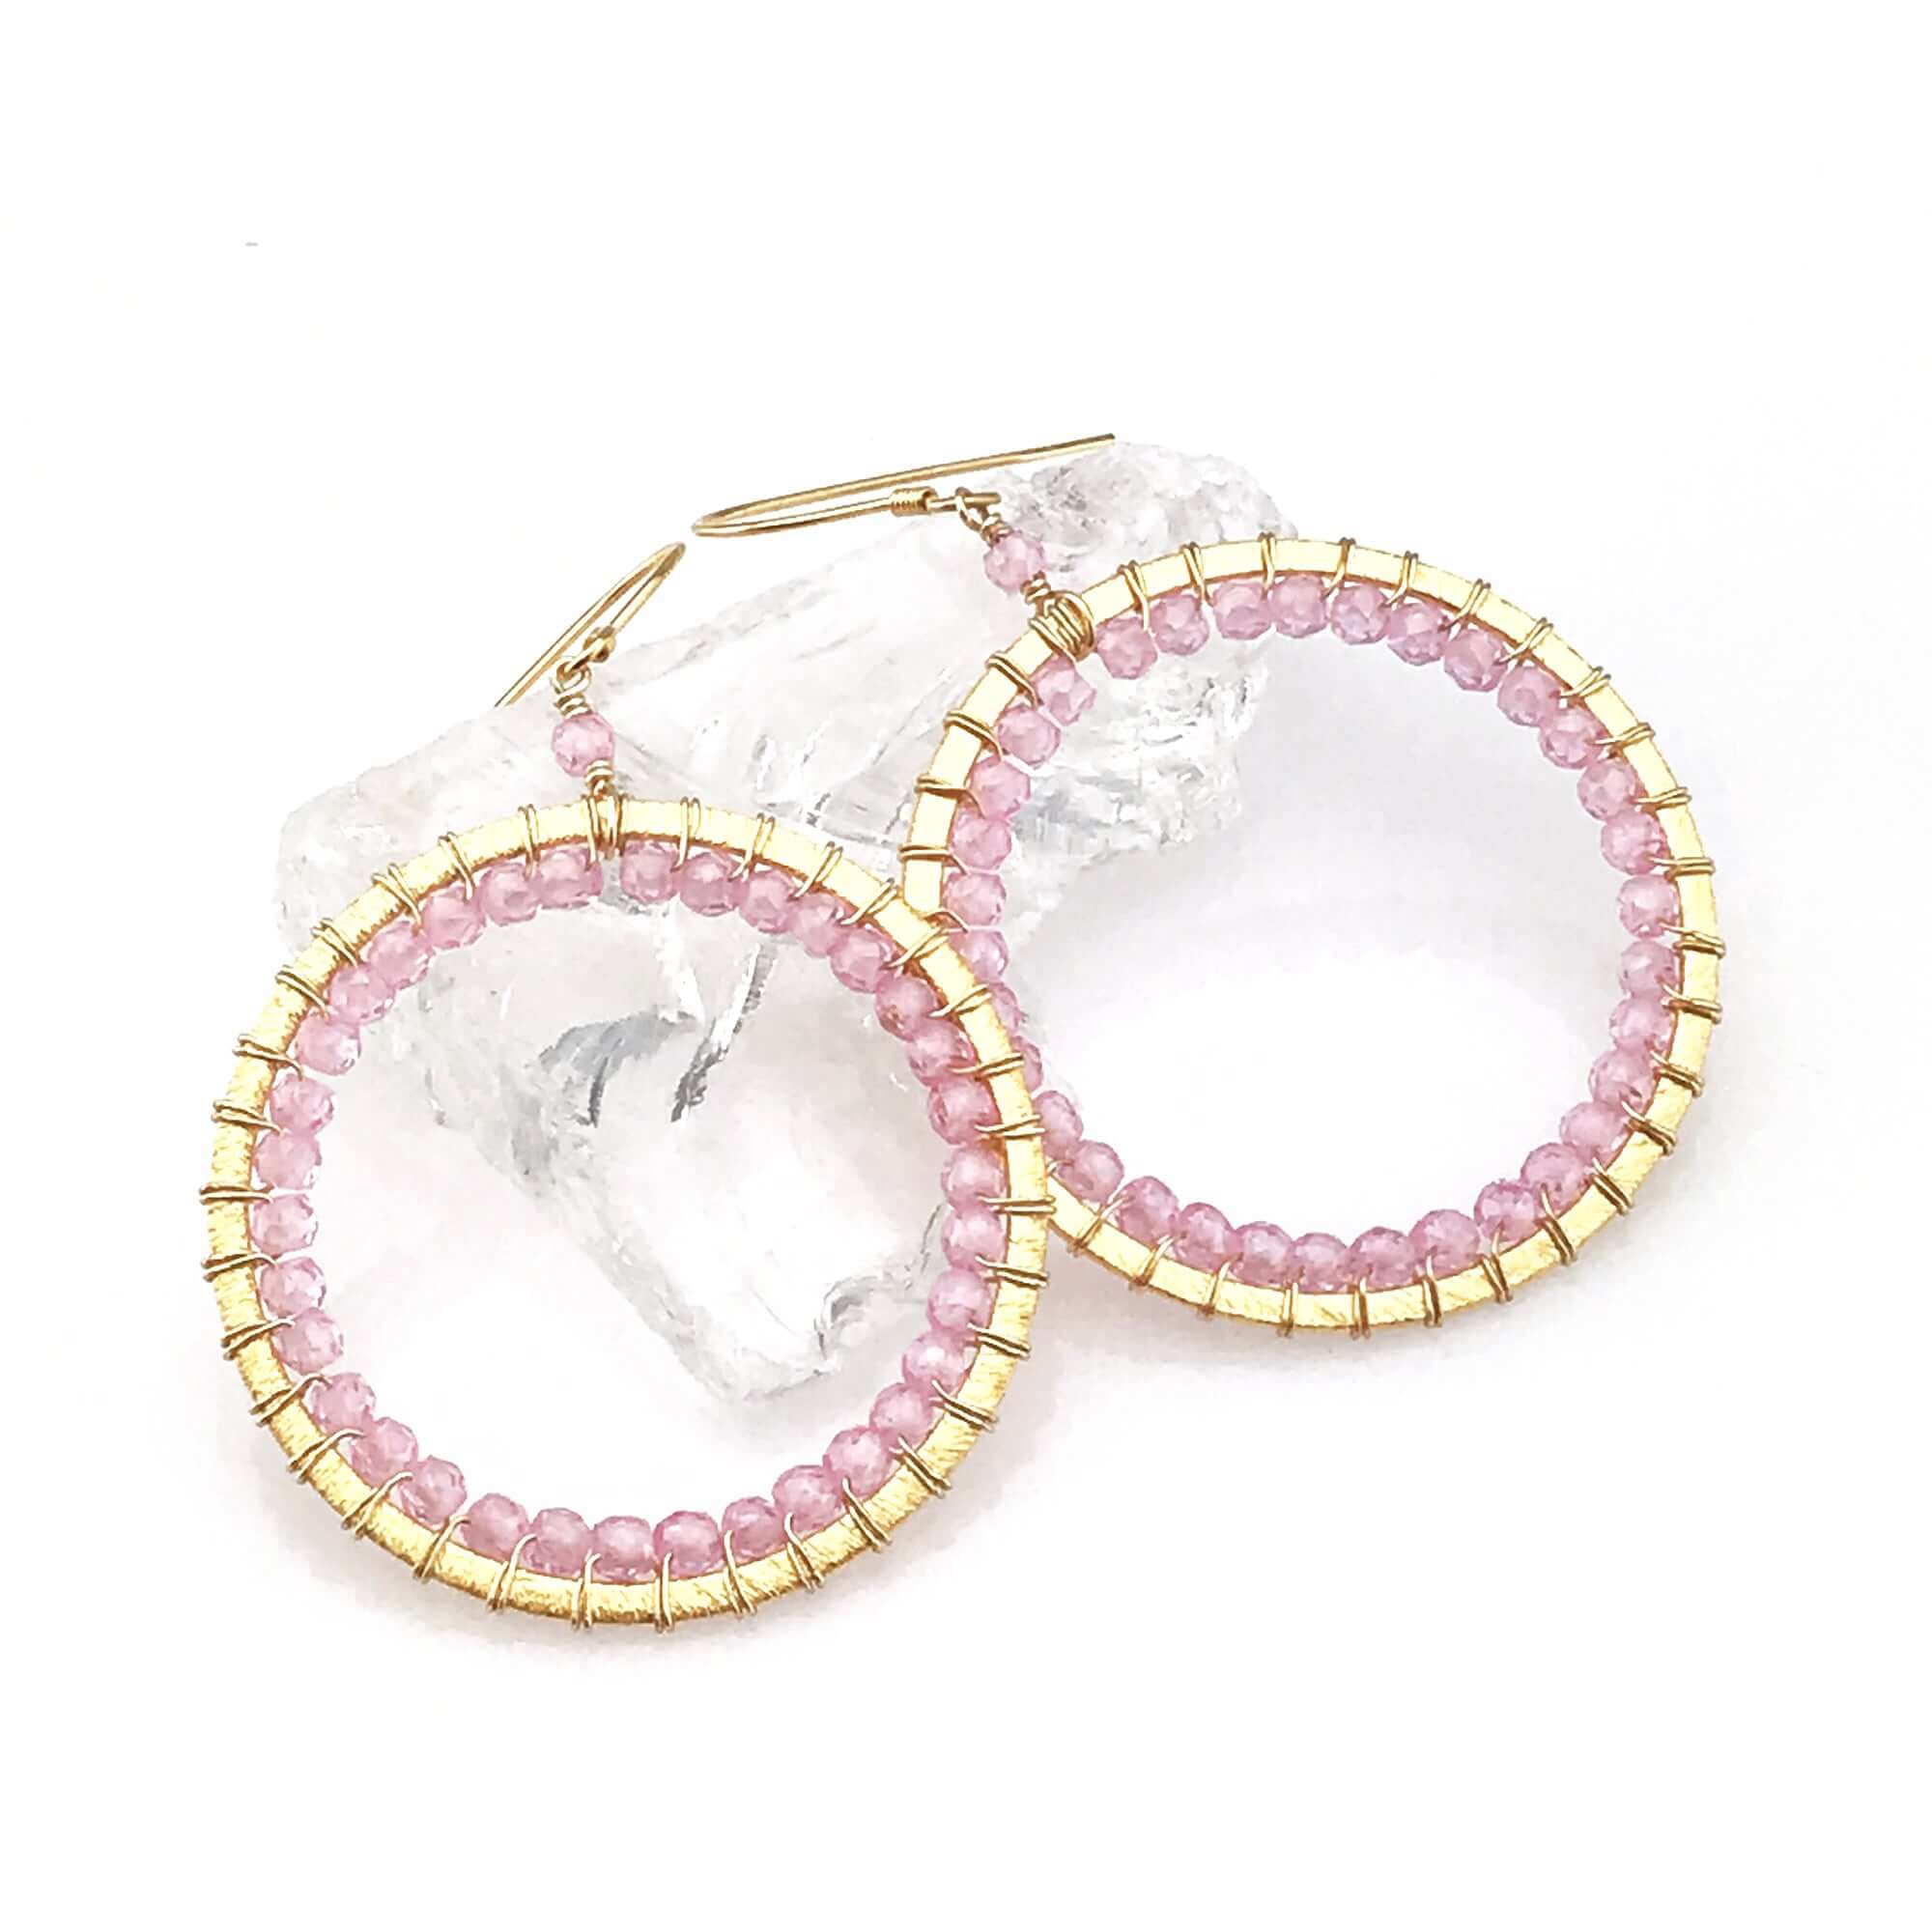 Elegant Modern Circle Rose Quartz Earrings 